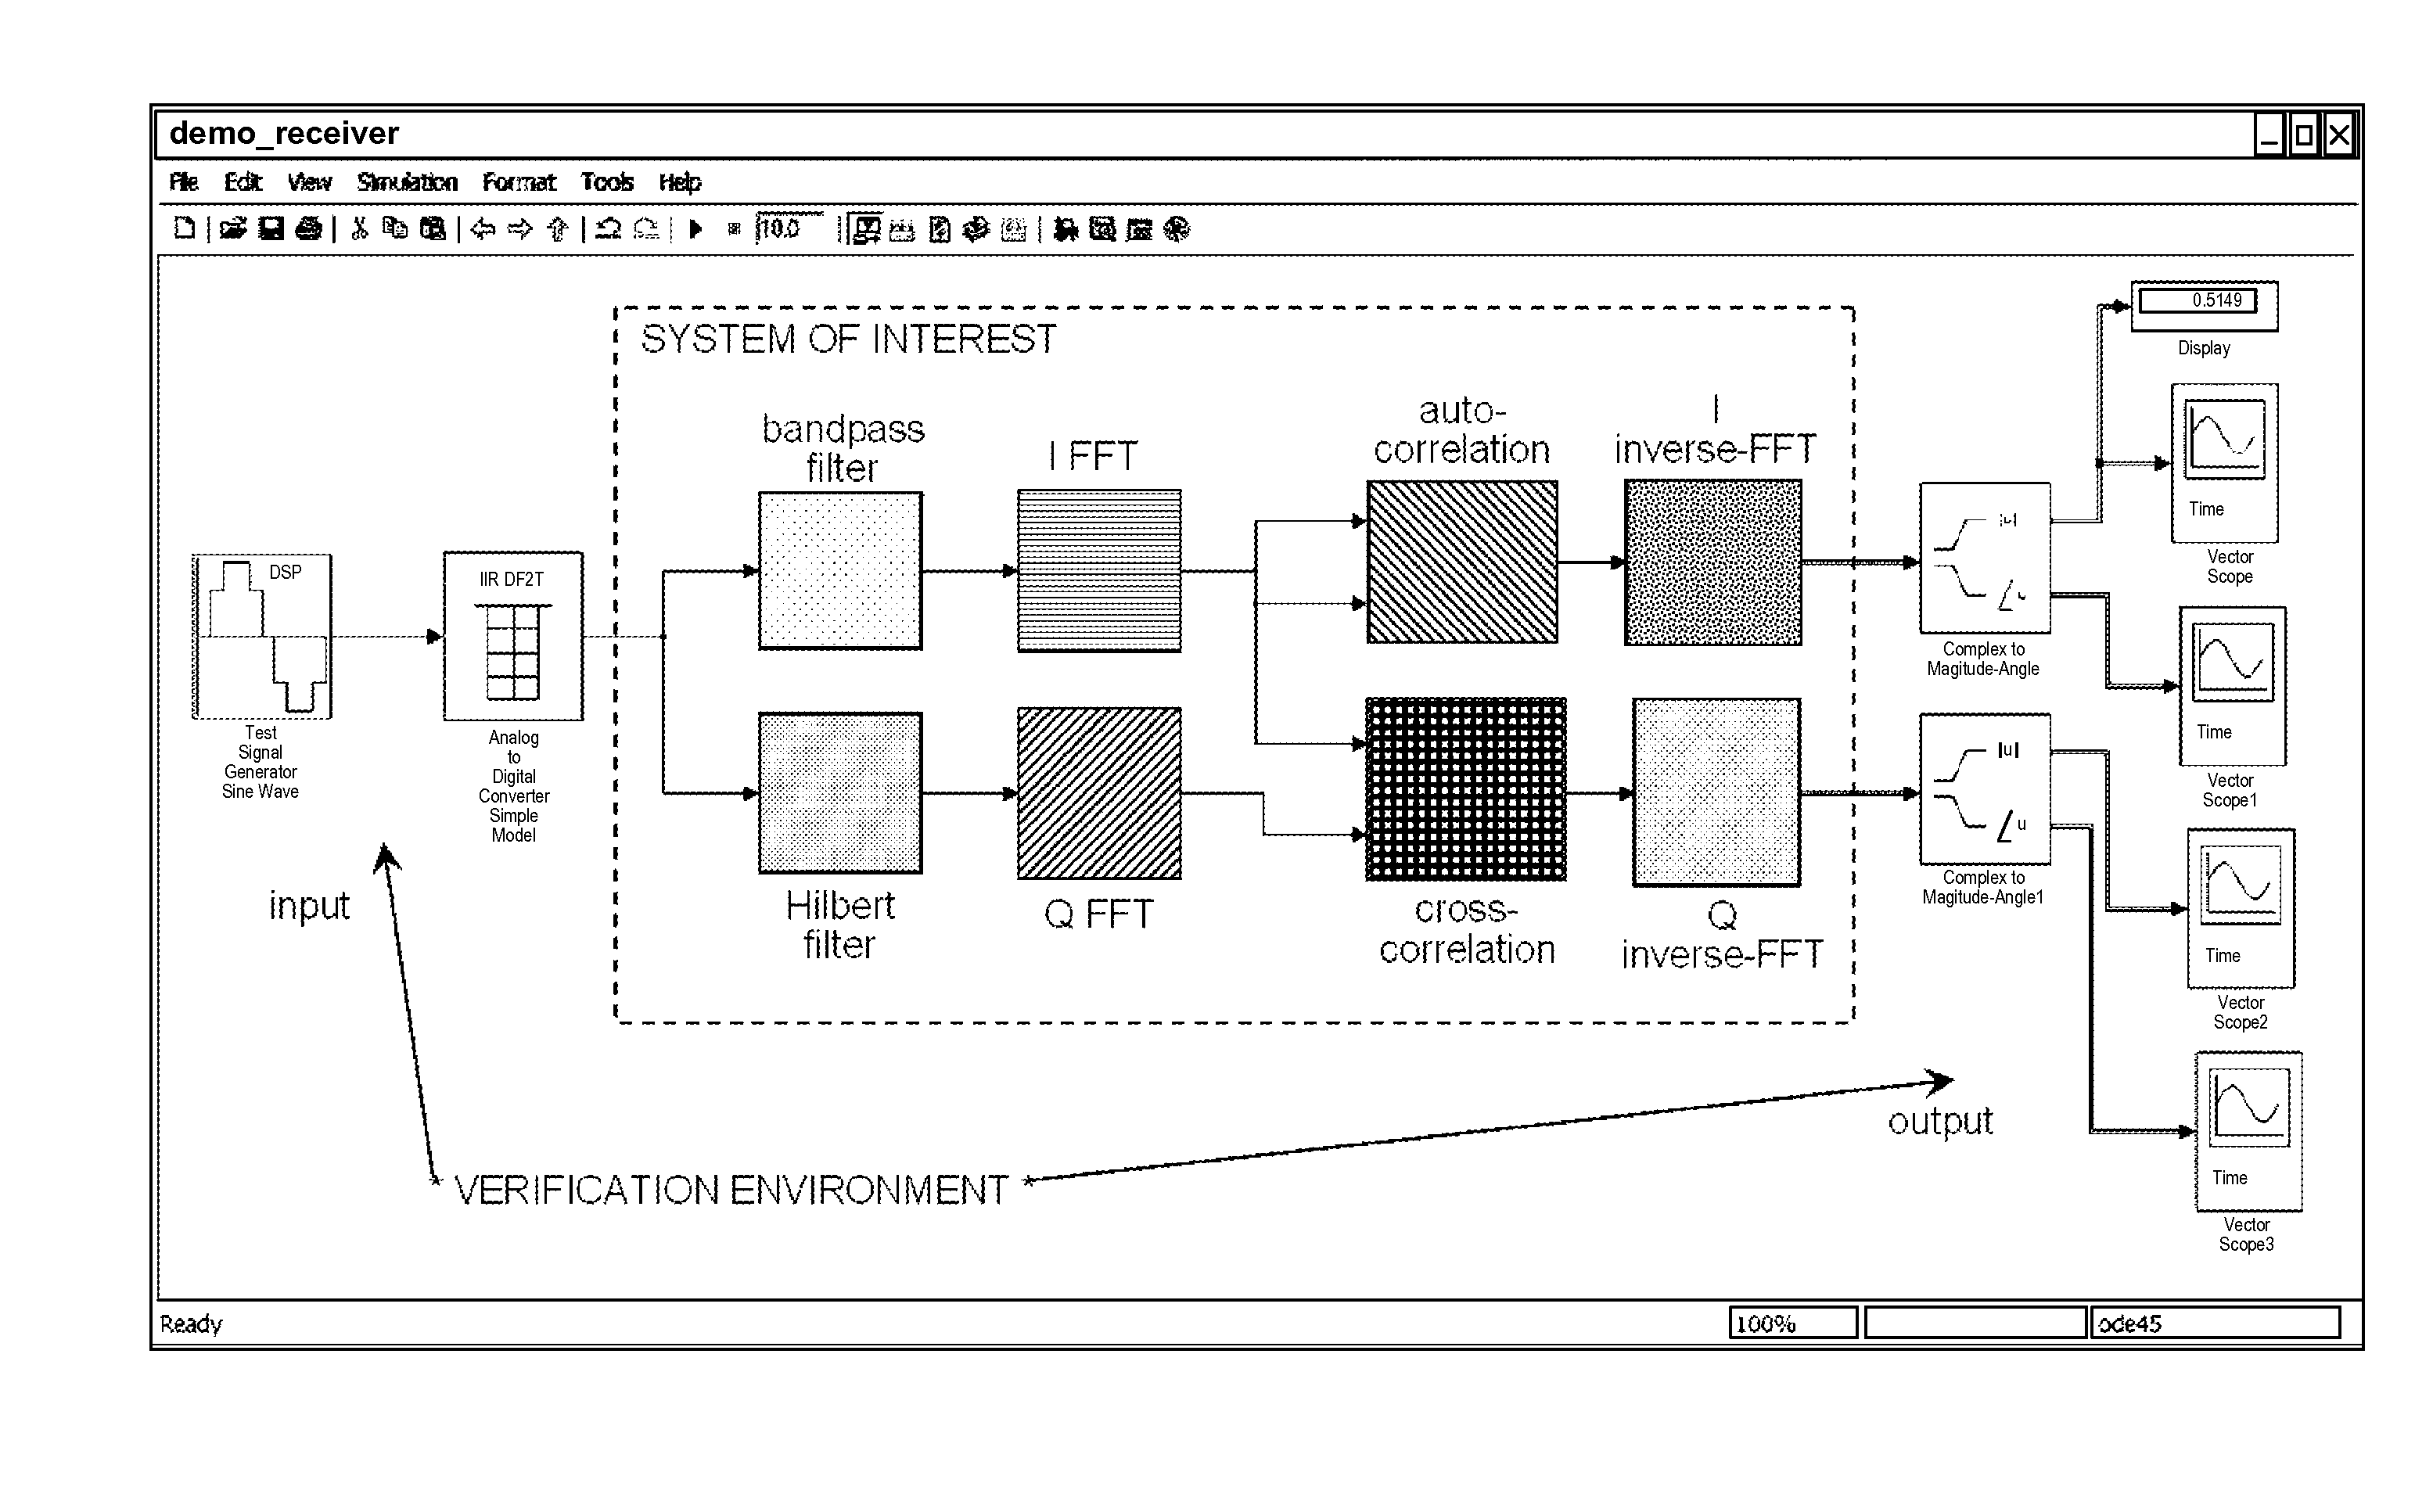 Programming a multi-processor system